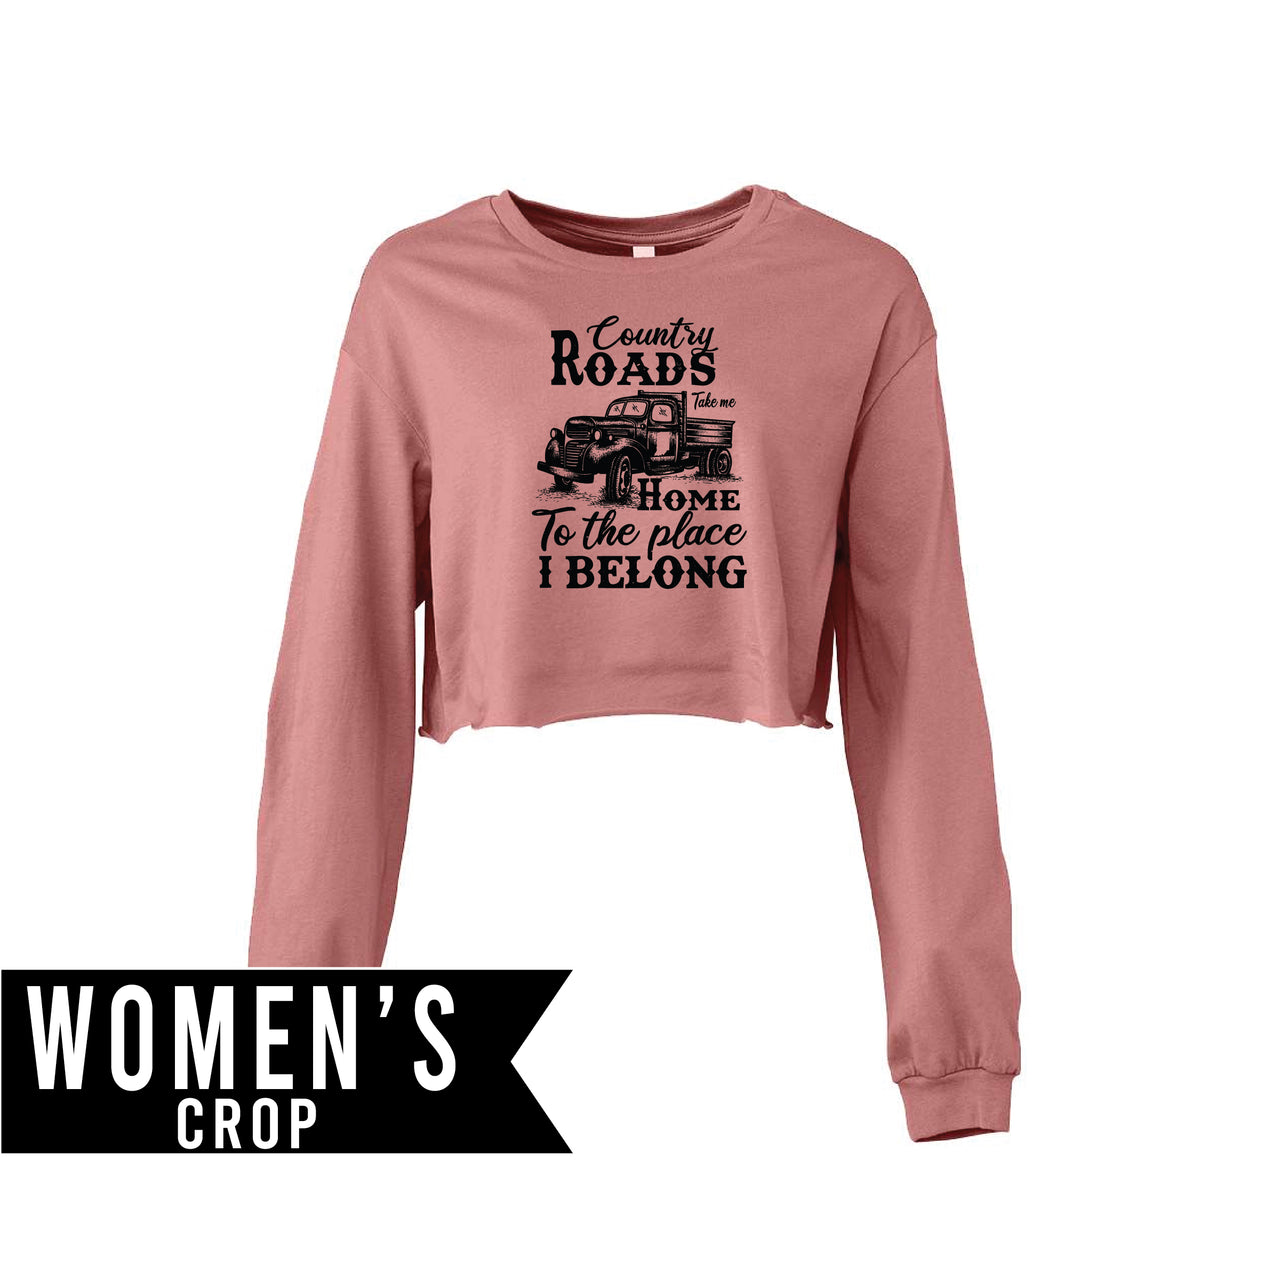 Fashion Women's Crop Long Sleeve Tee - Indiana Country Roads